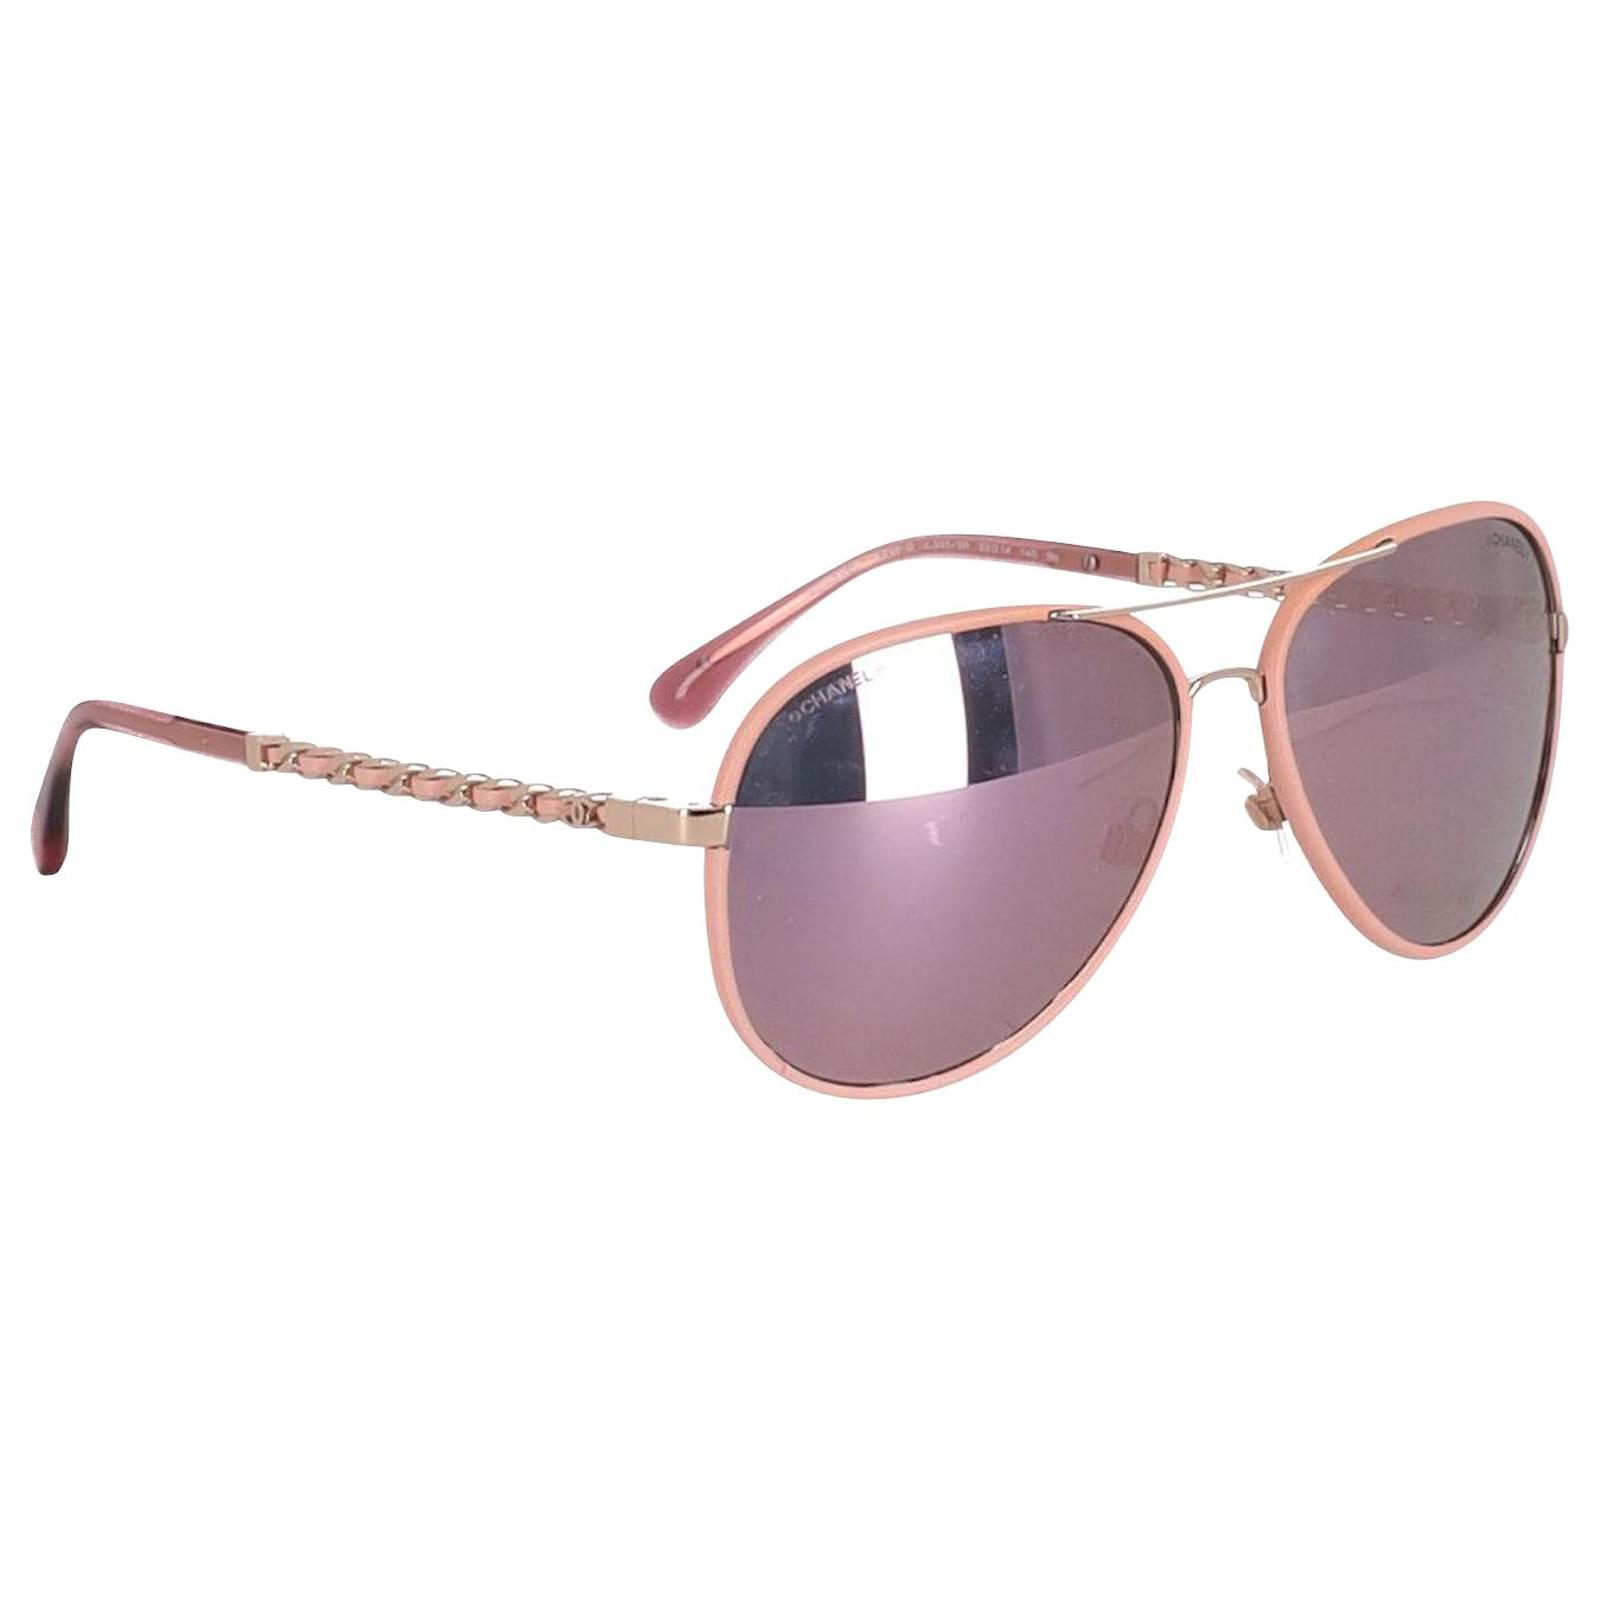 Chanel Aviator Sunglasses in Pink PVC